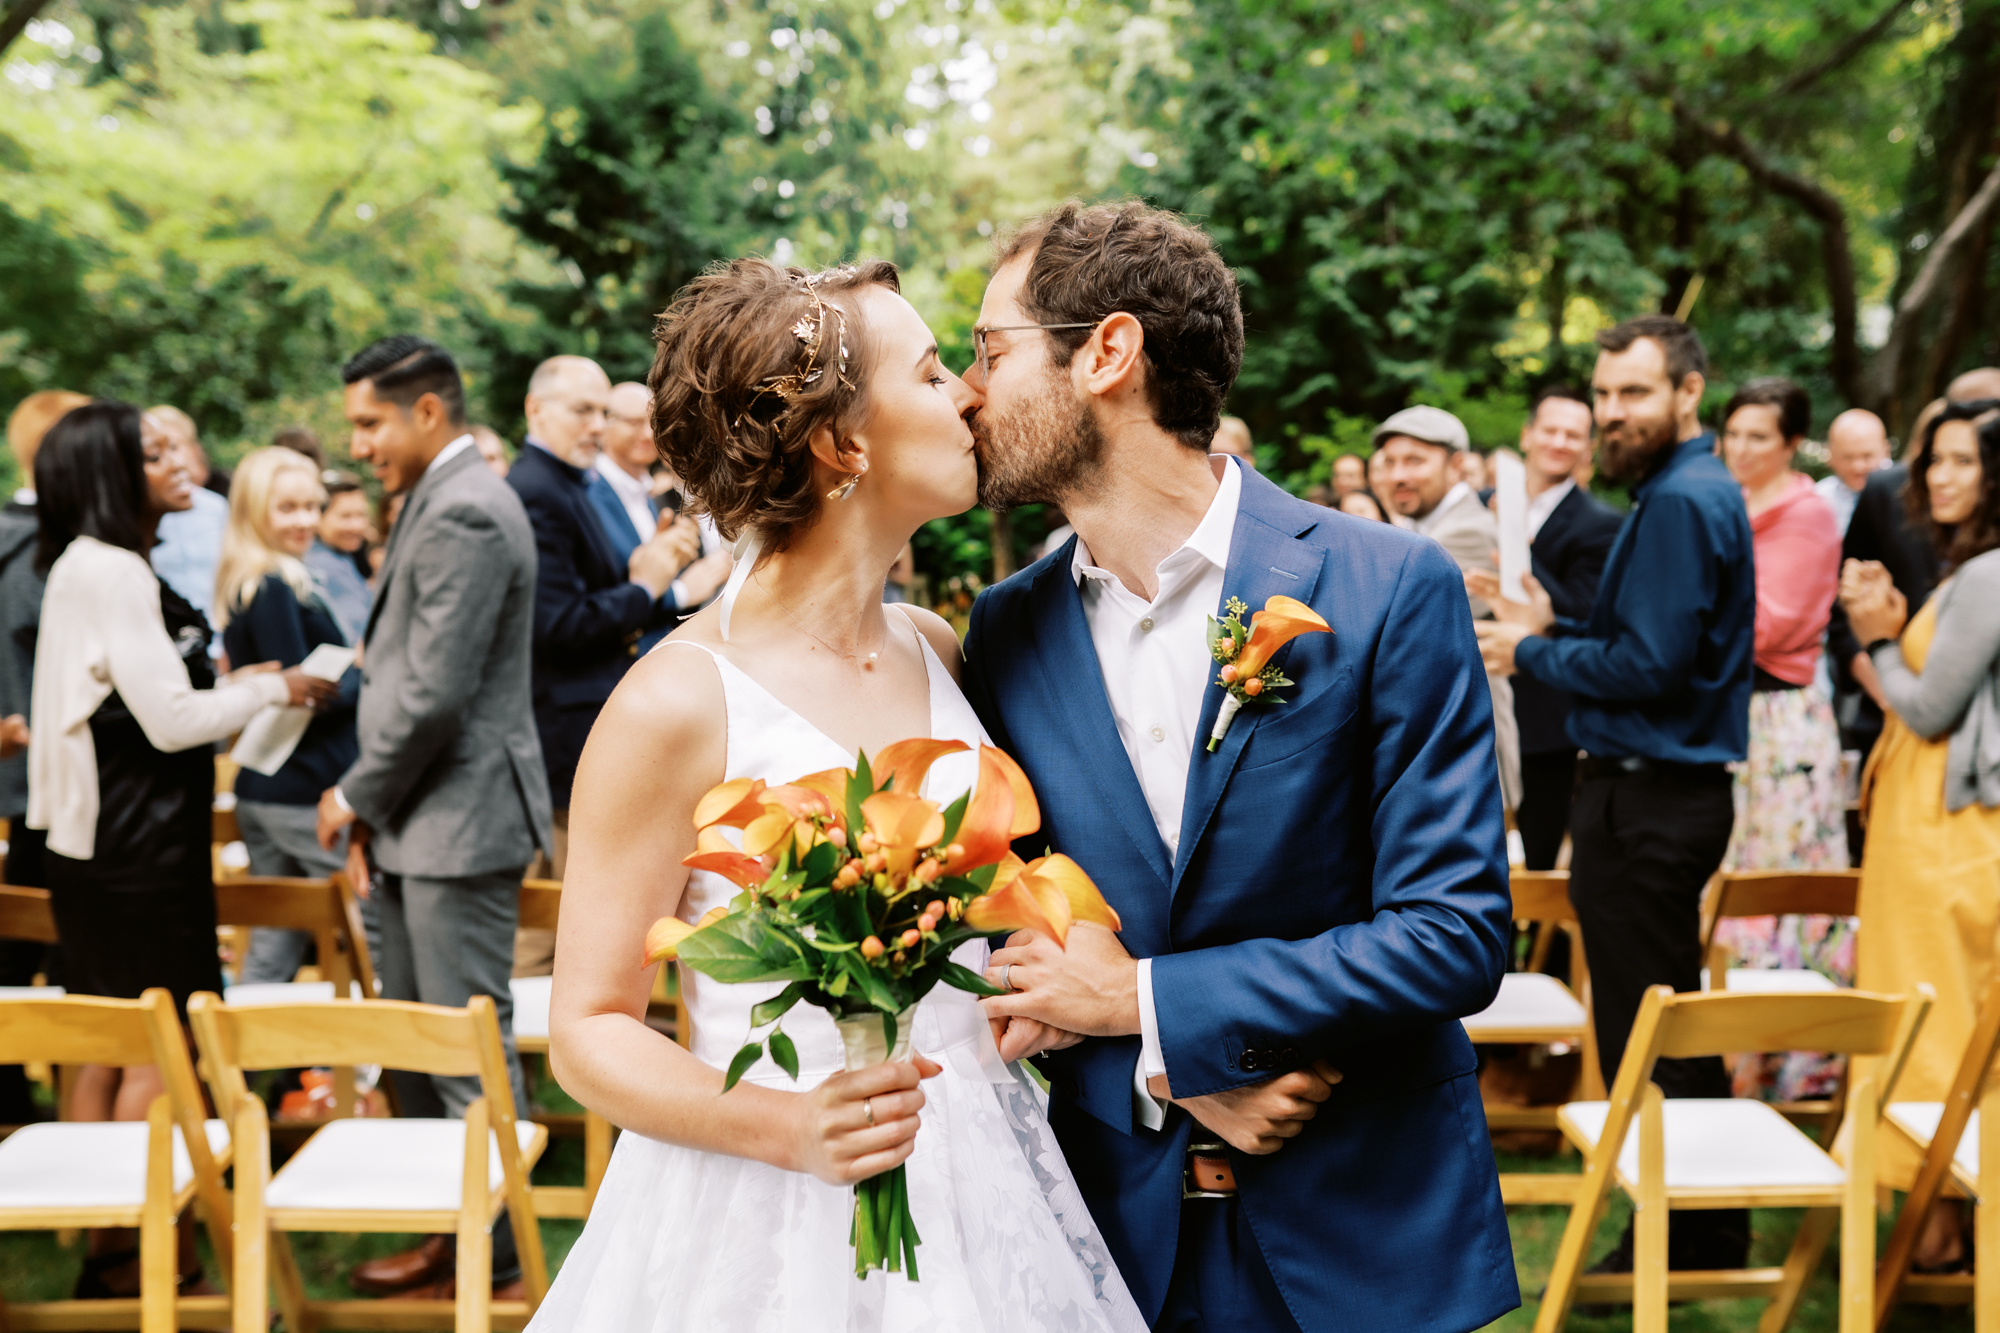 Dunn Garden Weddings: Amy and Scott walk down the aisle